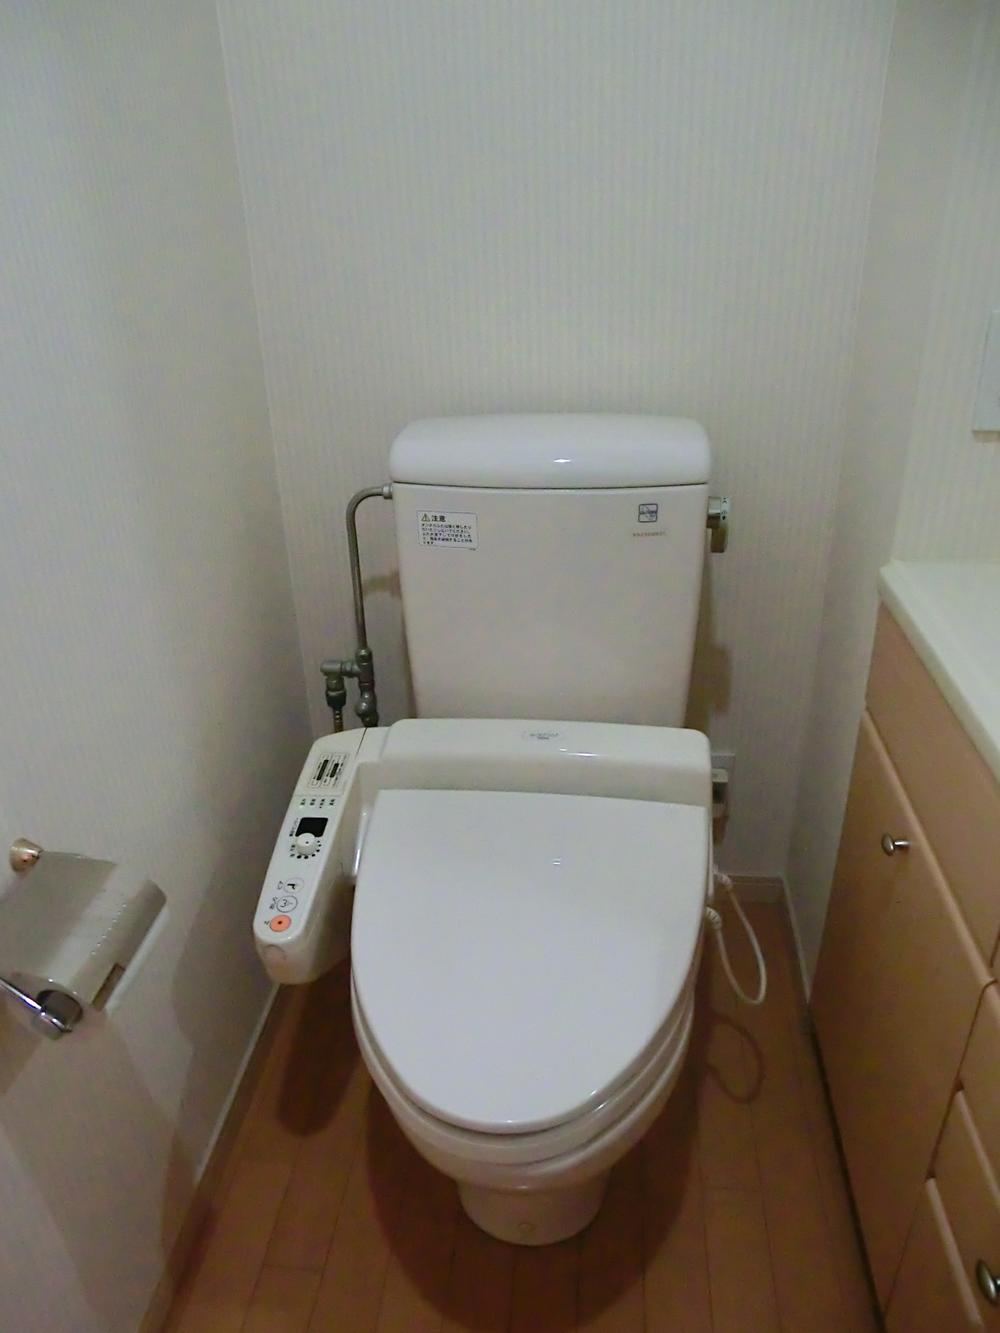 Toilet. Indoor (January 2014) Shooting